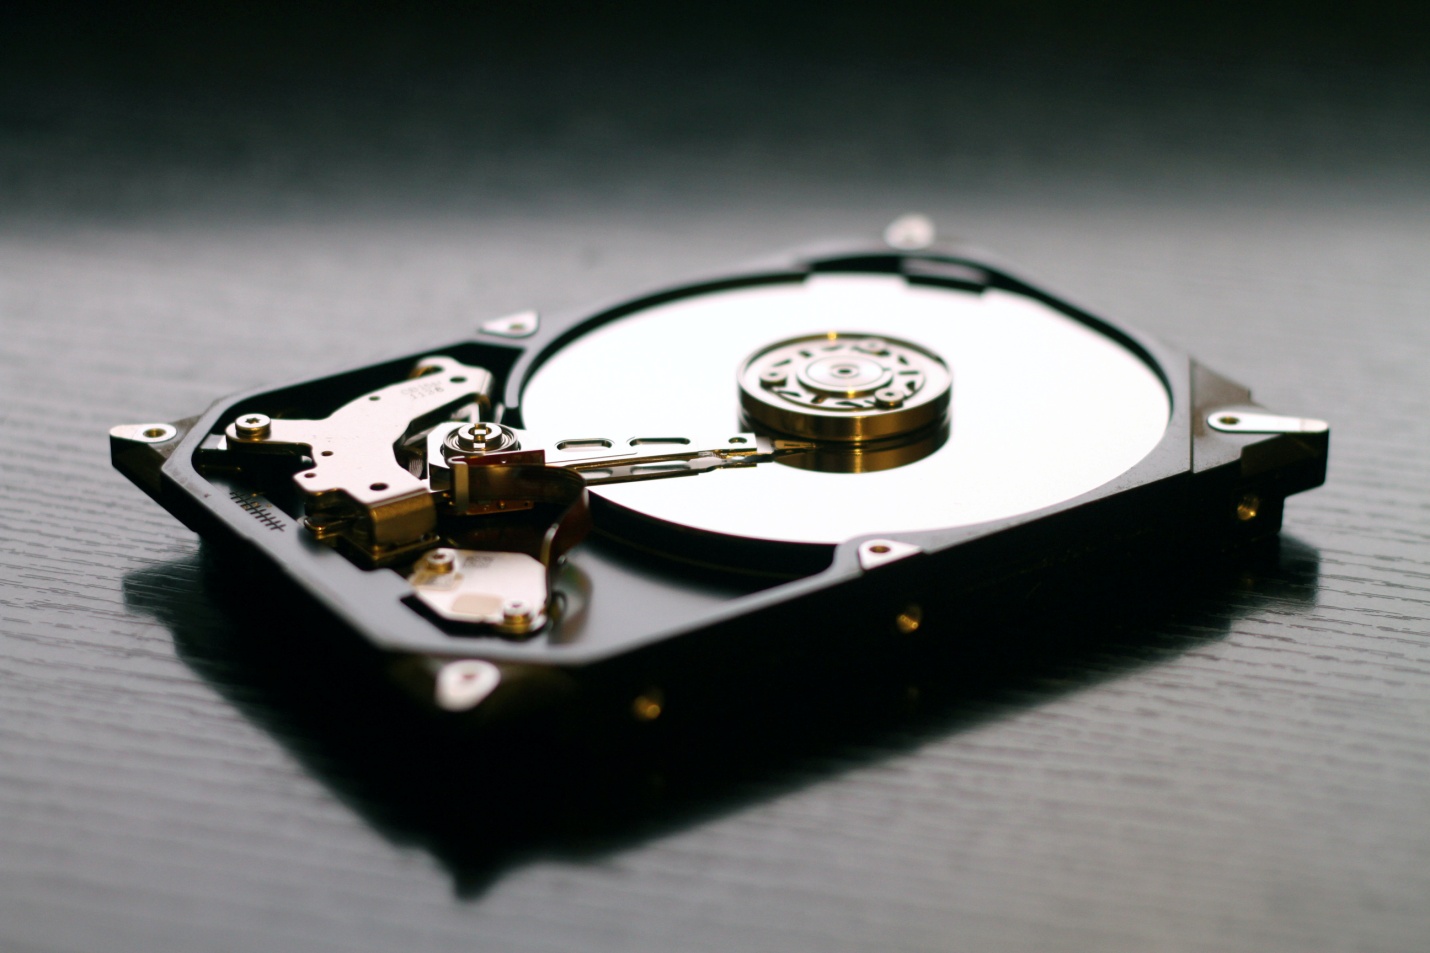 Hard drive destruction myths that are baseless